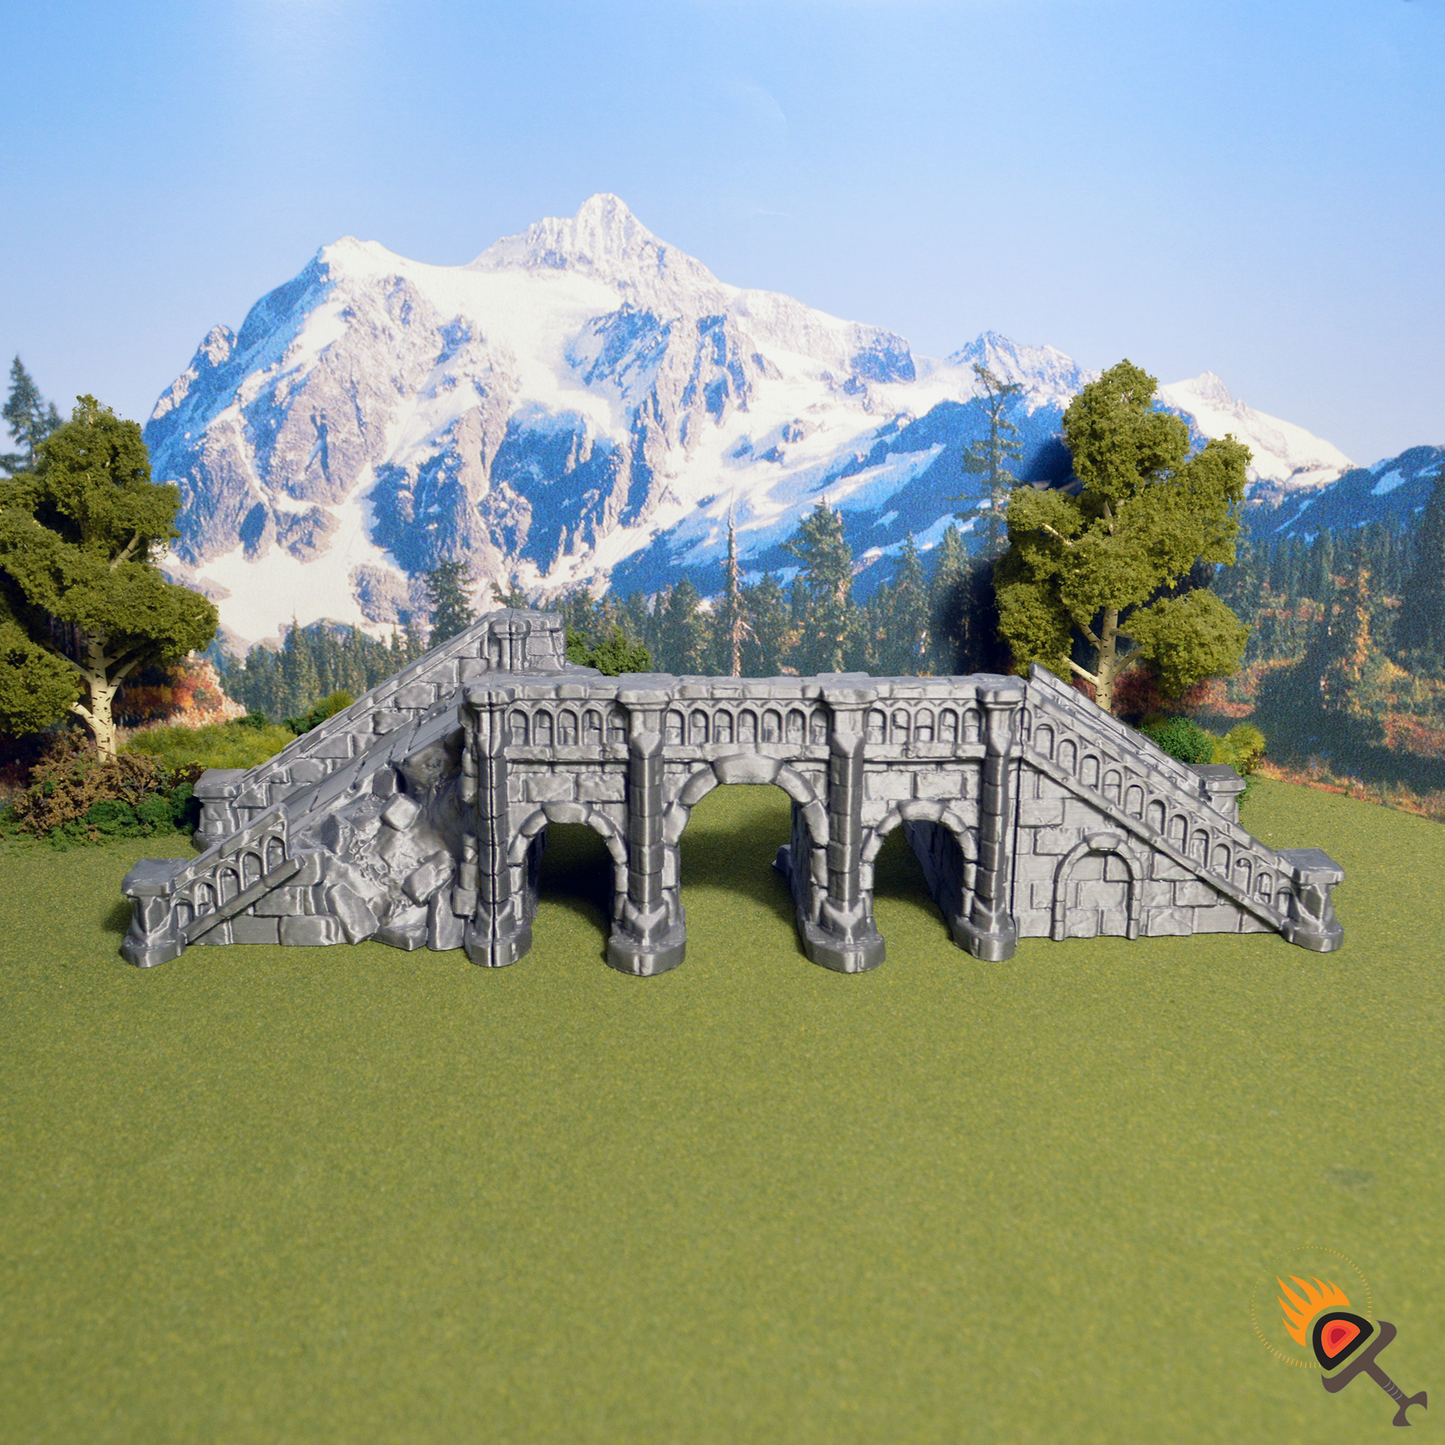 Miniature Bridge Ruins 15mm 28mm 32mm for D&D Terrain, DnD Pathfinder Arkenfel Medieval Stone Footbridge, Gift for Tabletop Gamers